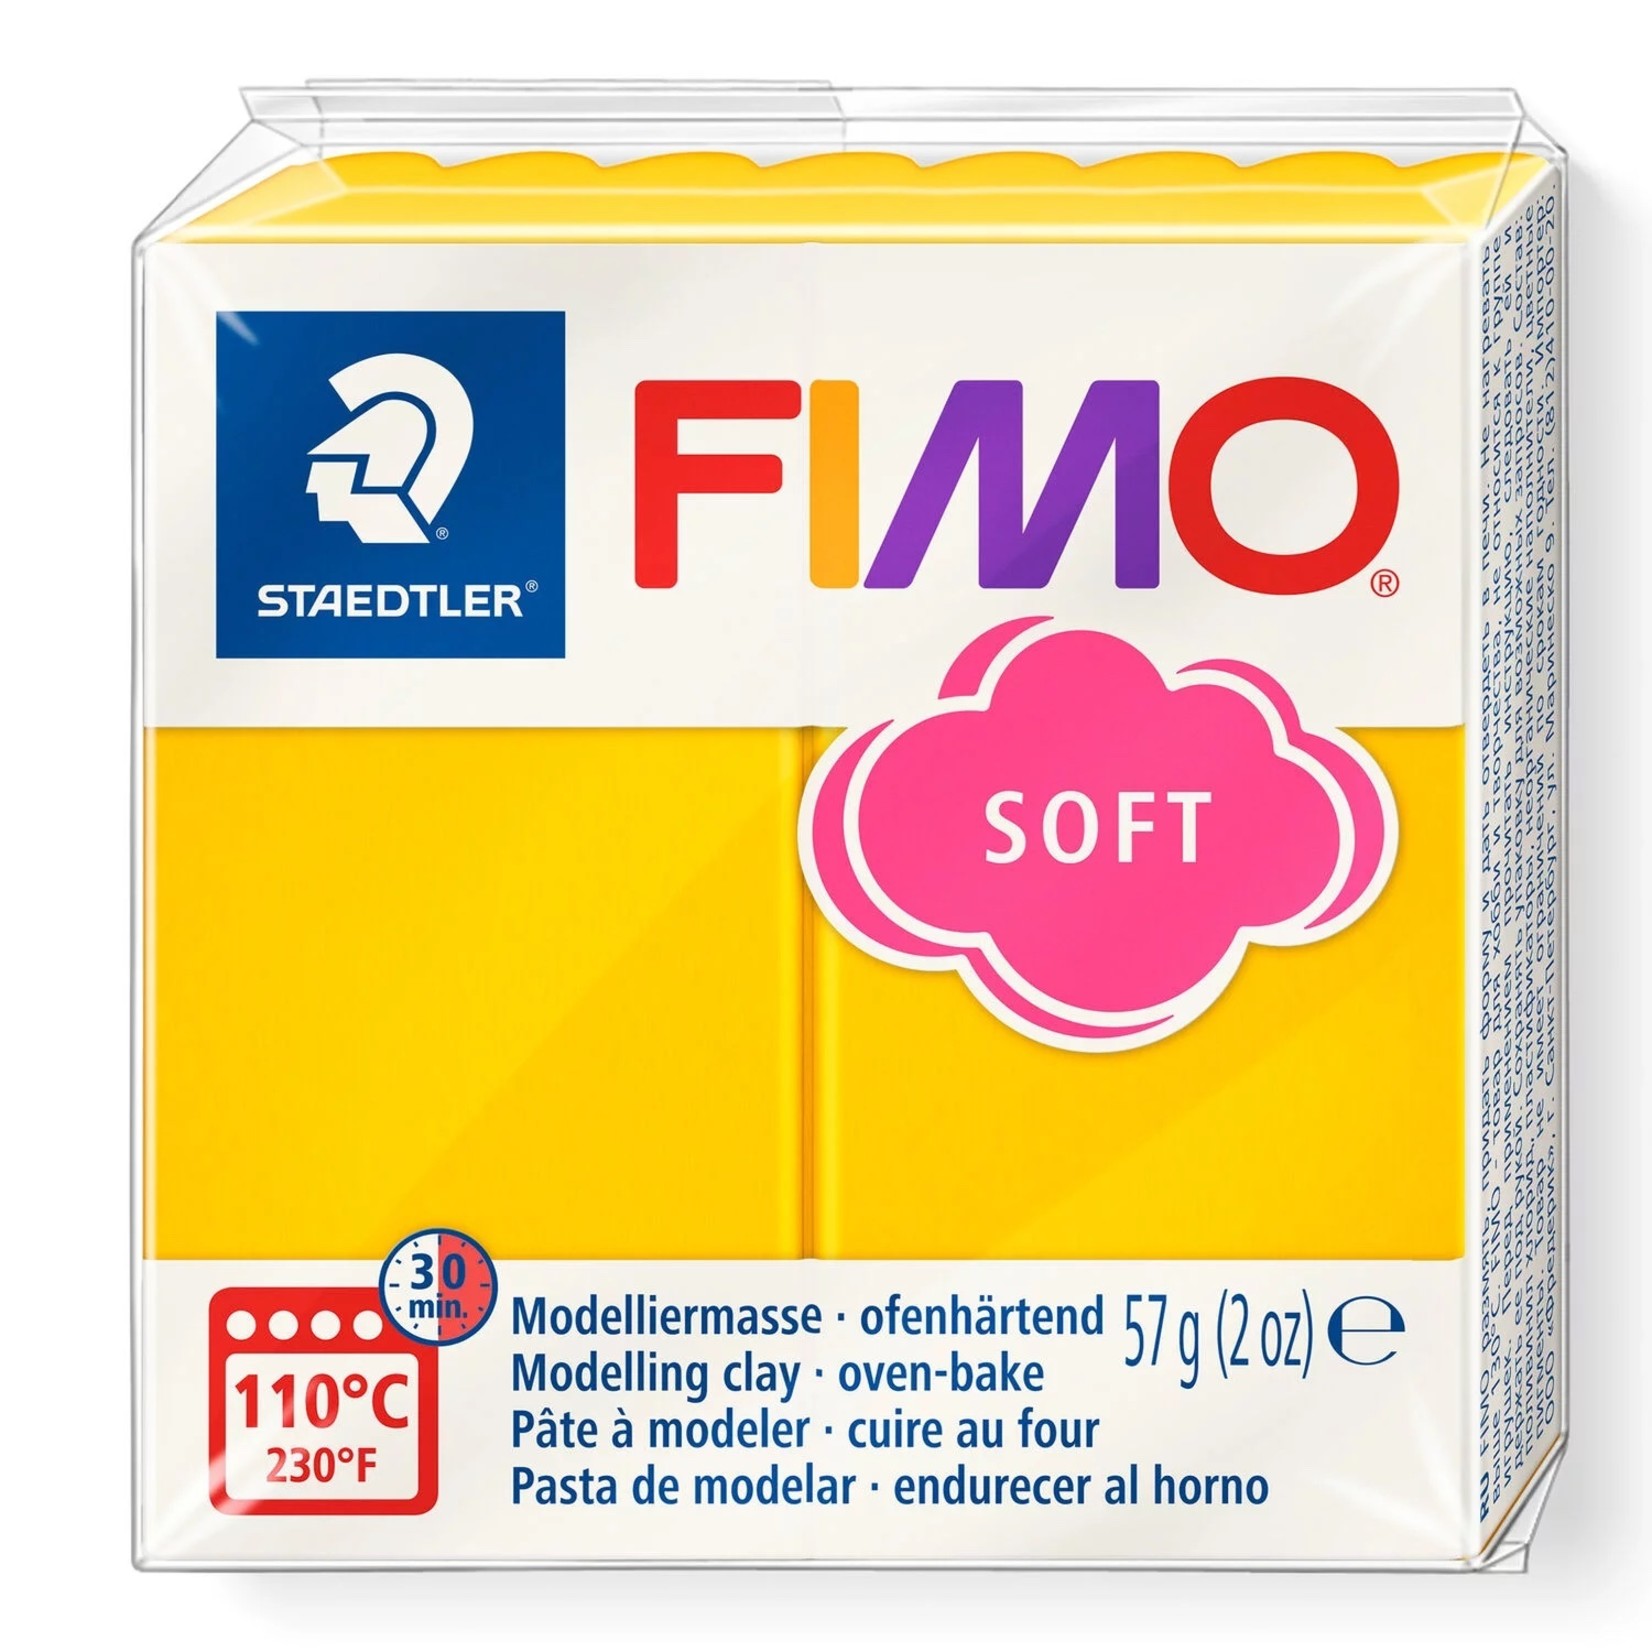 STAEDTLER FIMO SOFT 16 SUNFLOWER